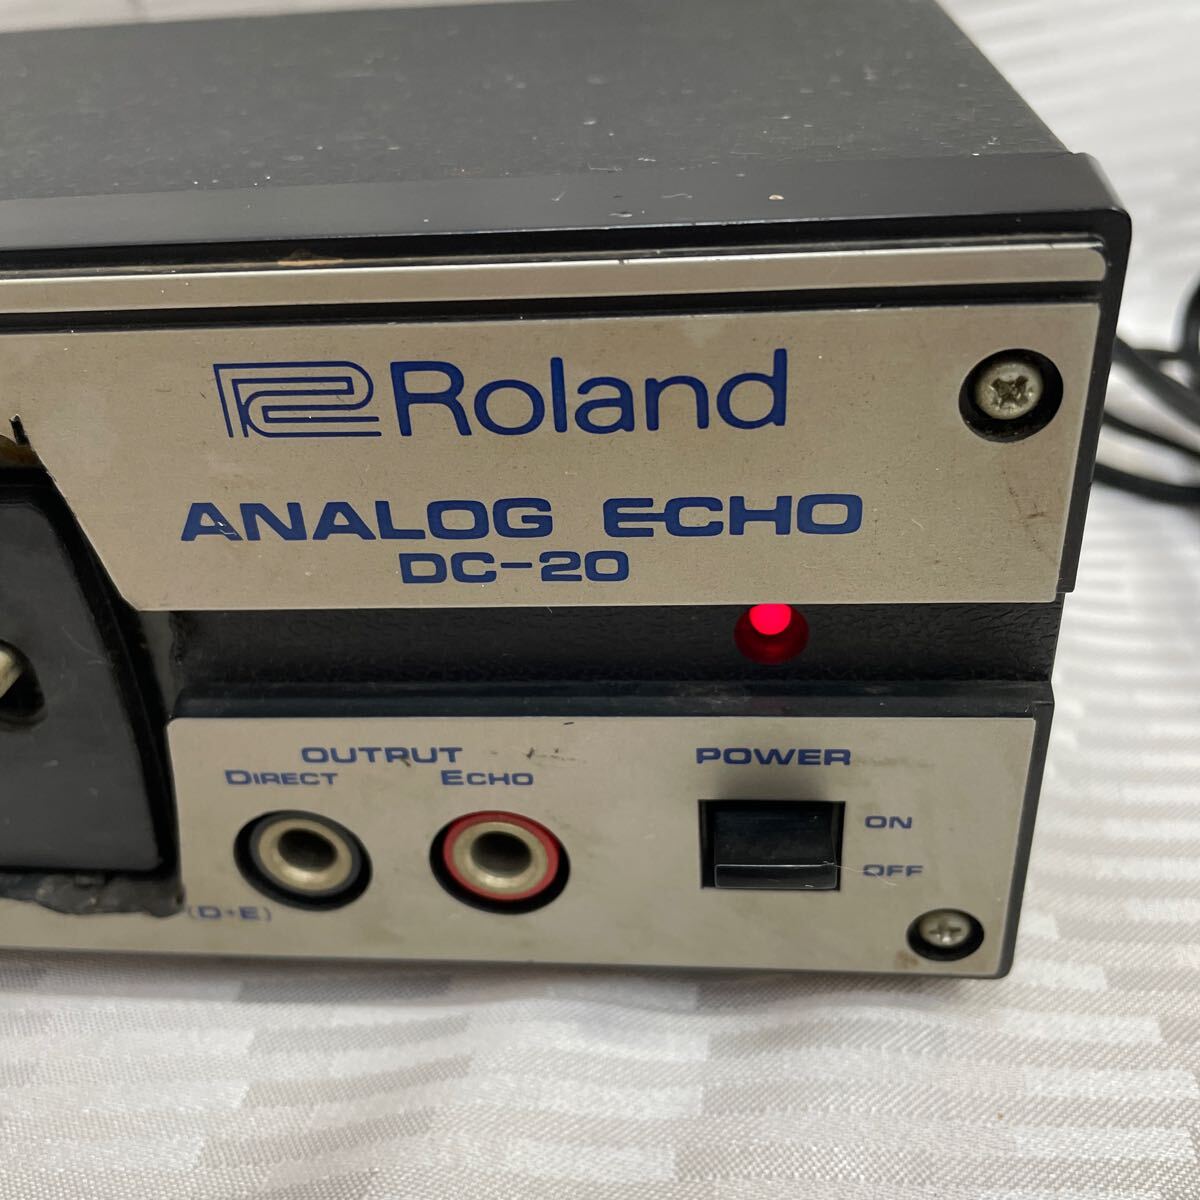 06980 Roland Roland ANALOG ECHO DC-20 electrification only operation not yet verification junk 